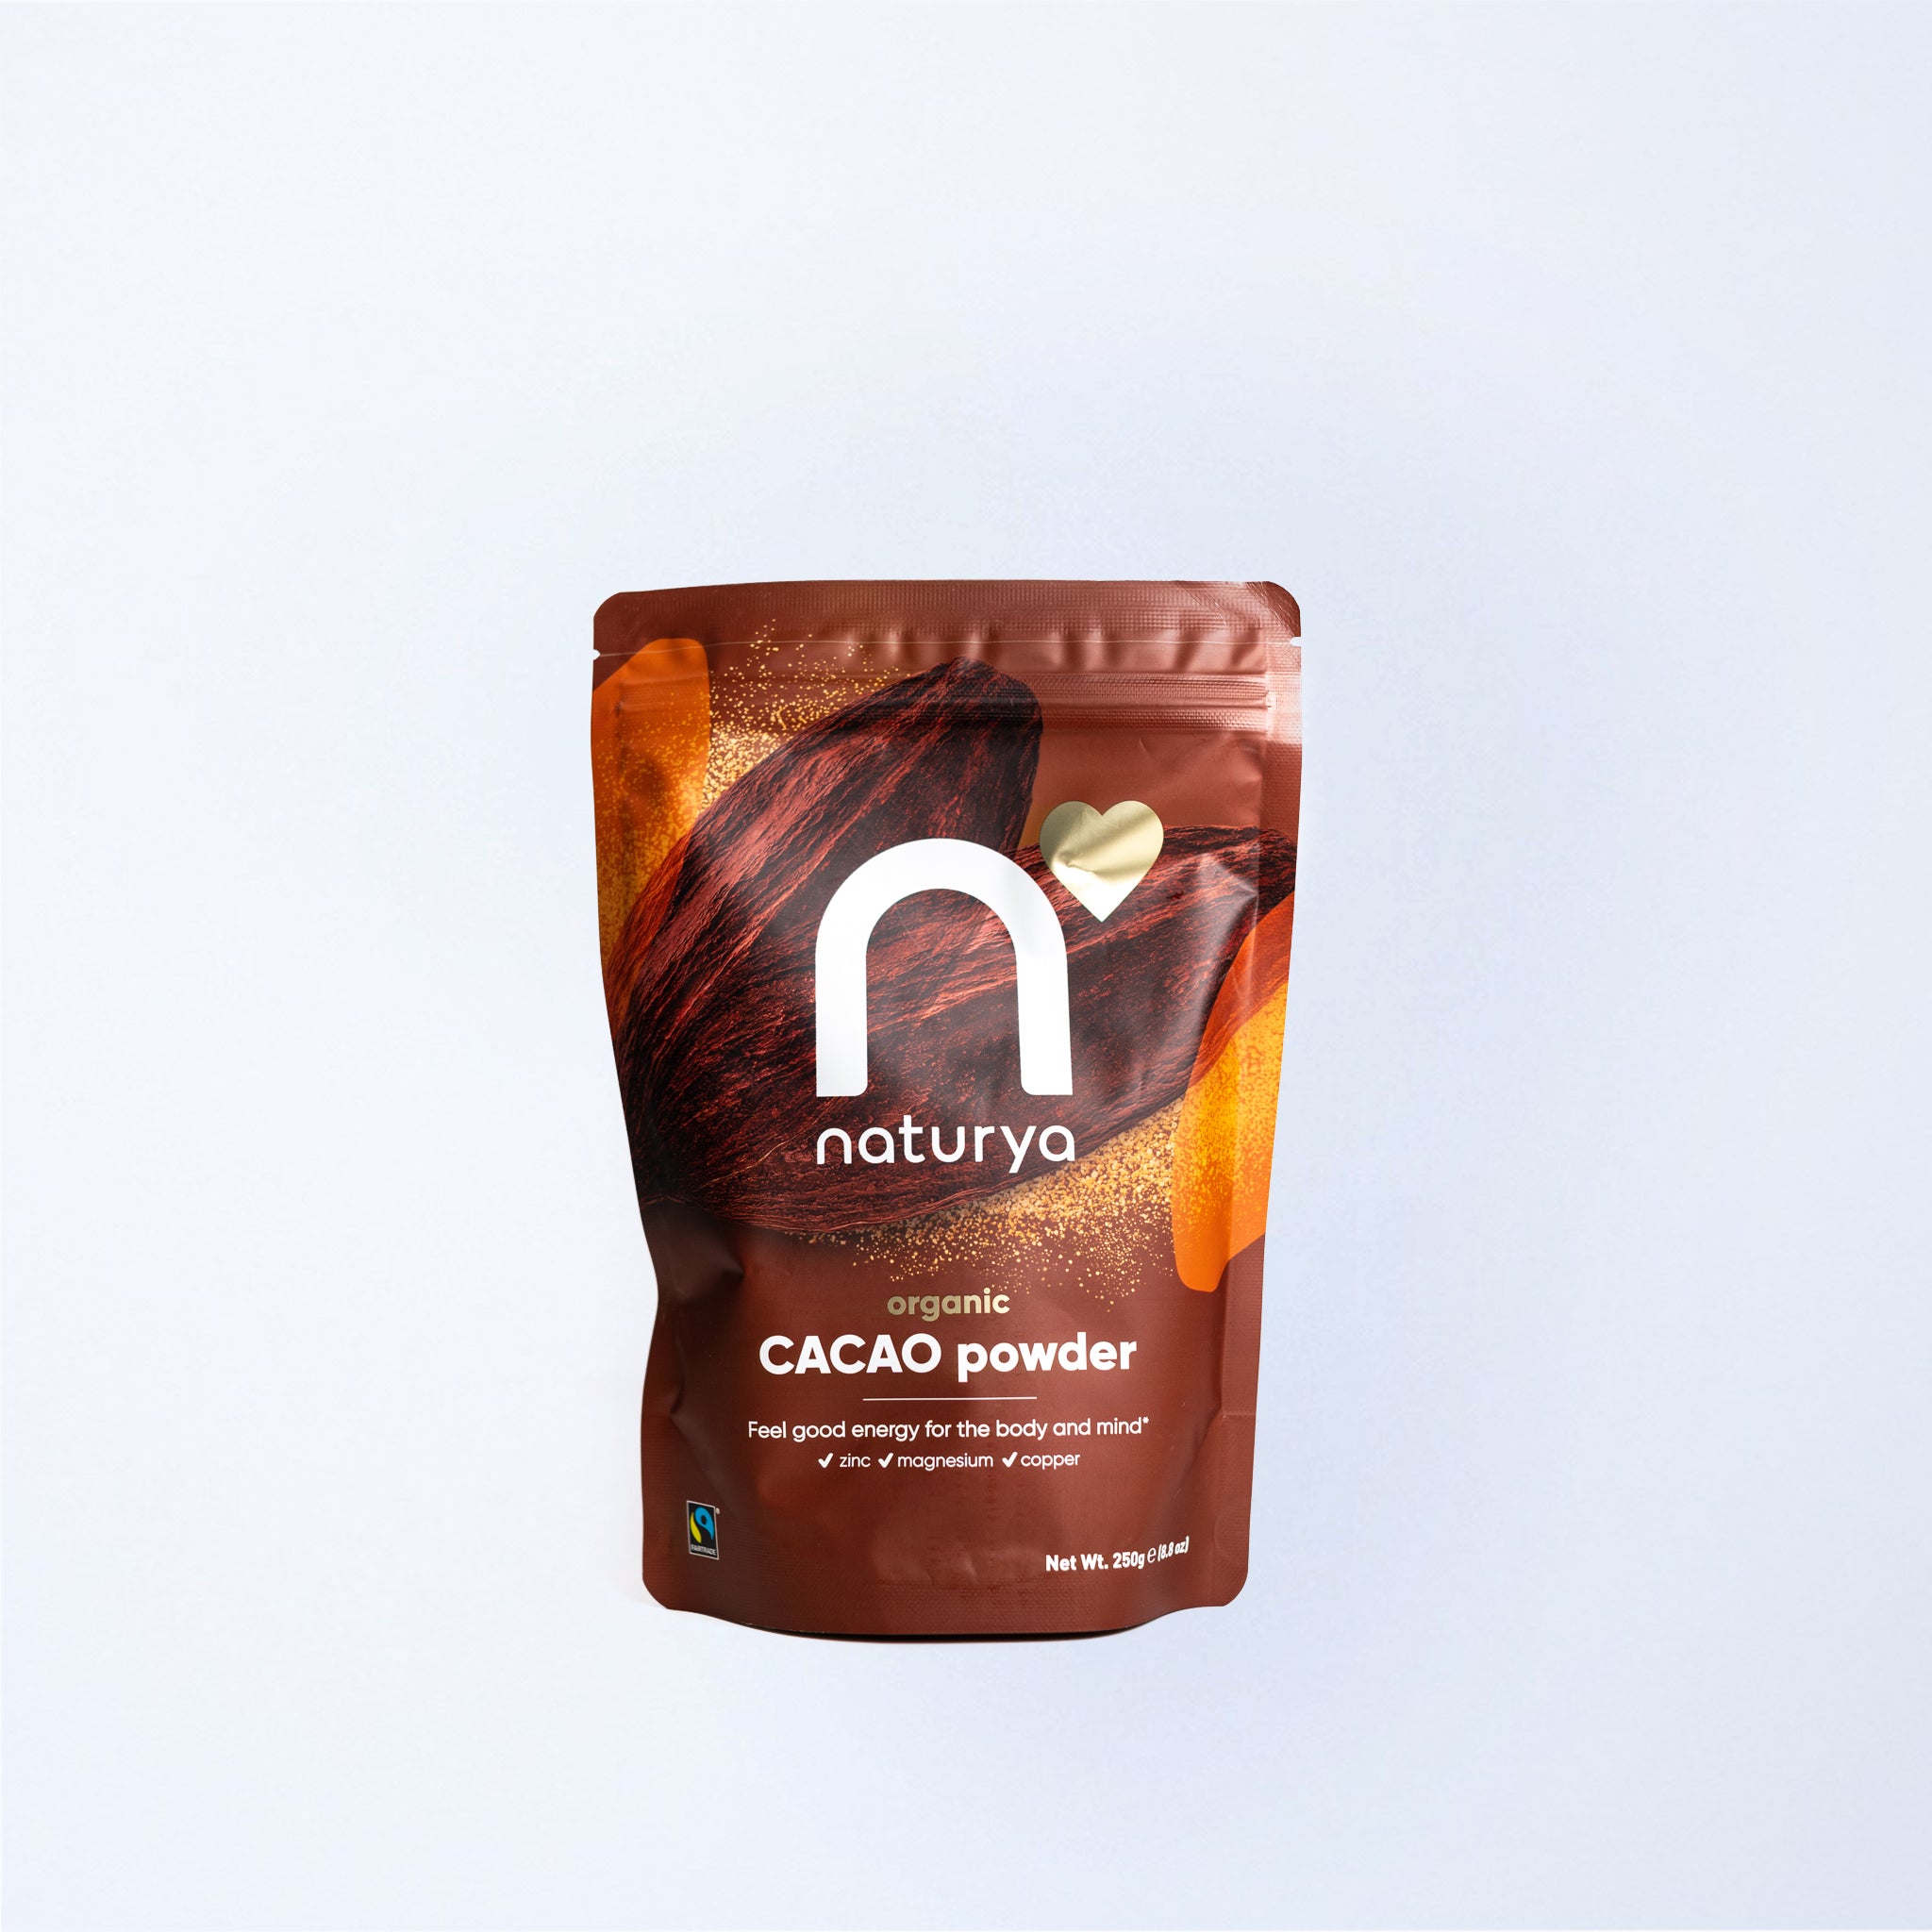 A bag of Naturya Organic Cacao Powder.